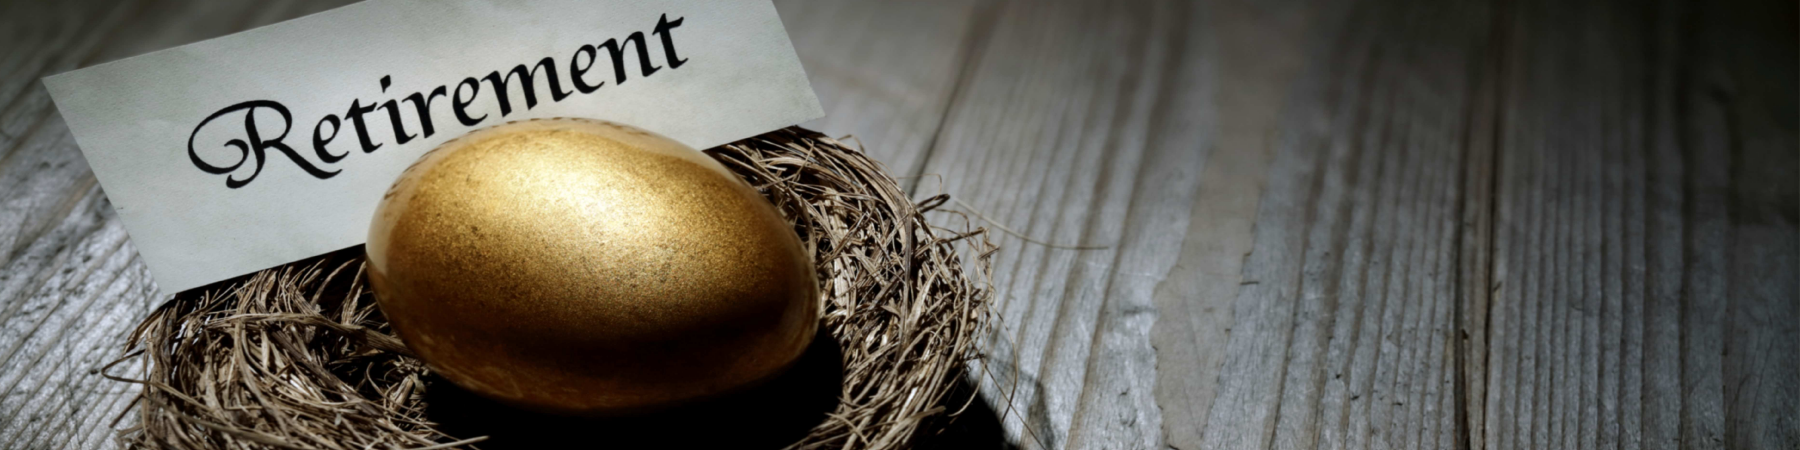 Golden egg in nest on wooden floorboards